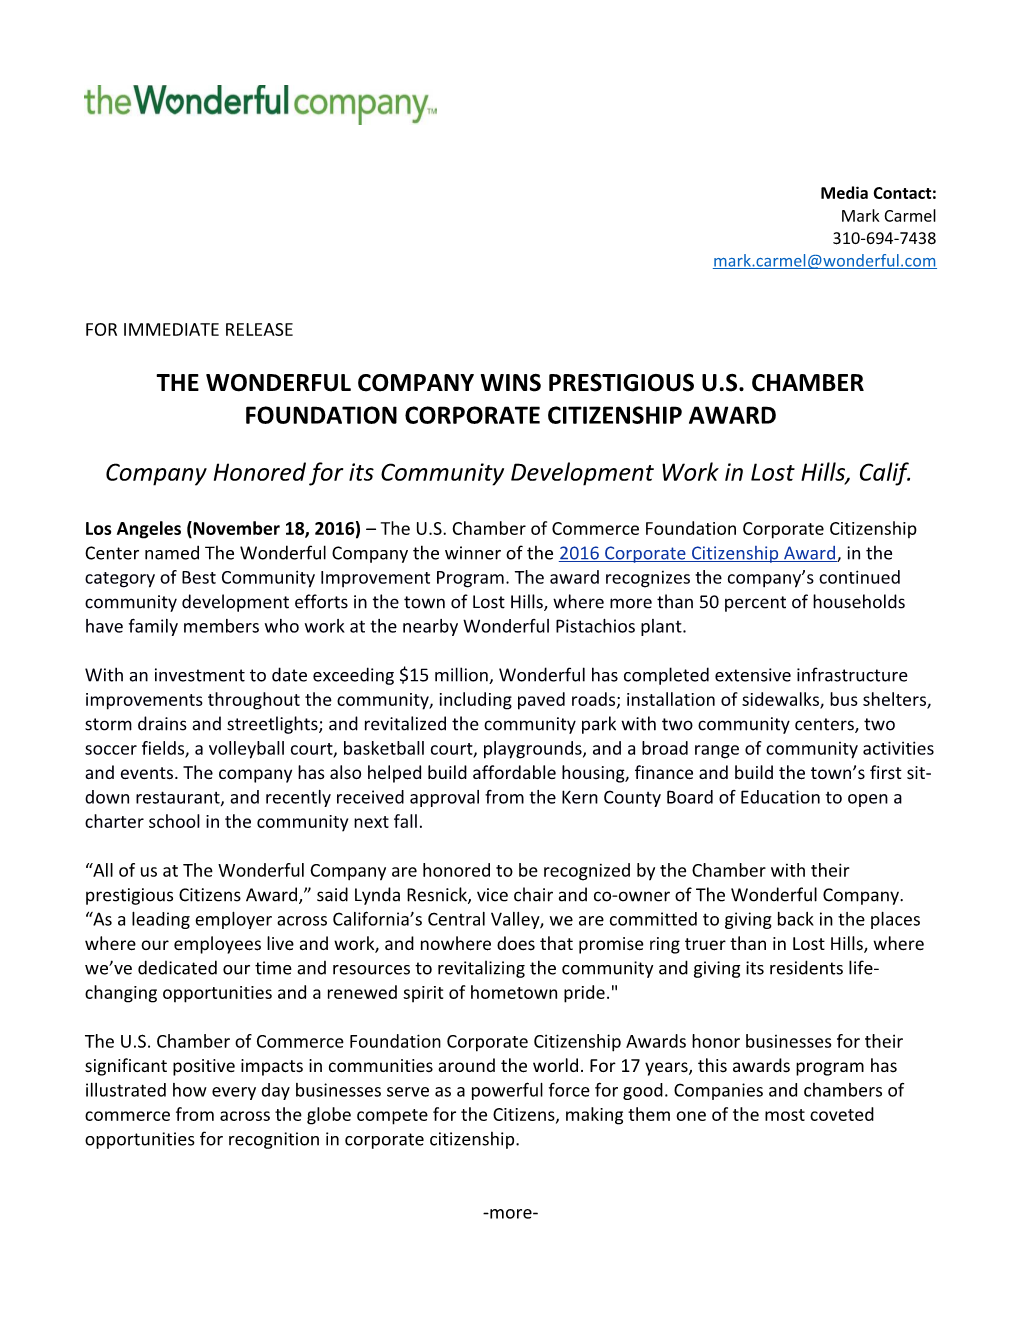 The Wonderful Company Wins Prestigious U.S. Chamber Foundation Corporate Citizenship Award